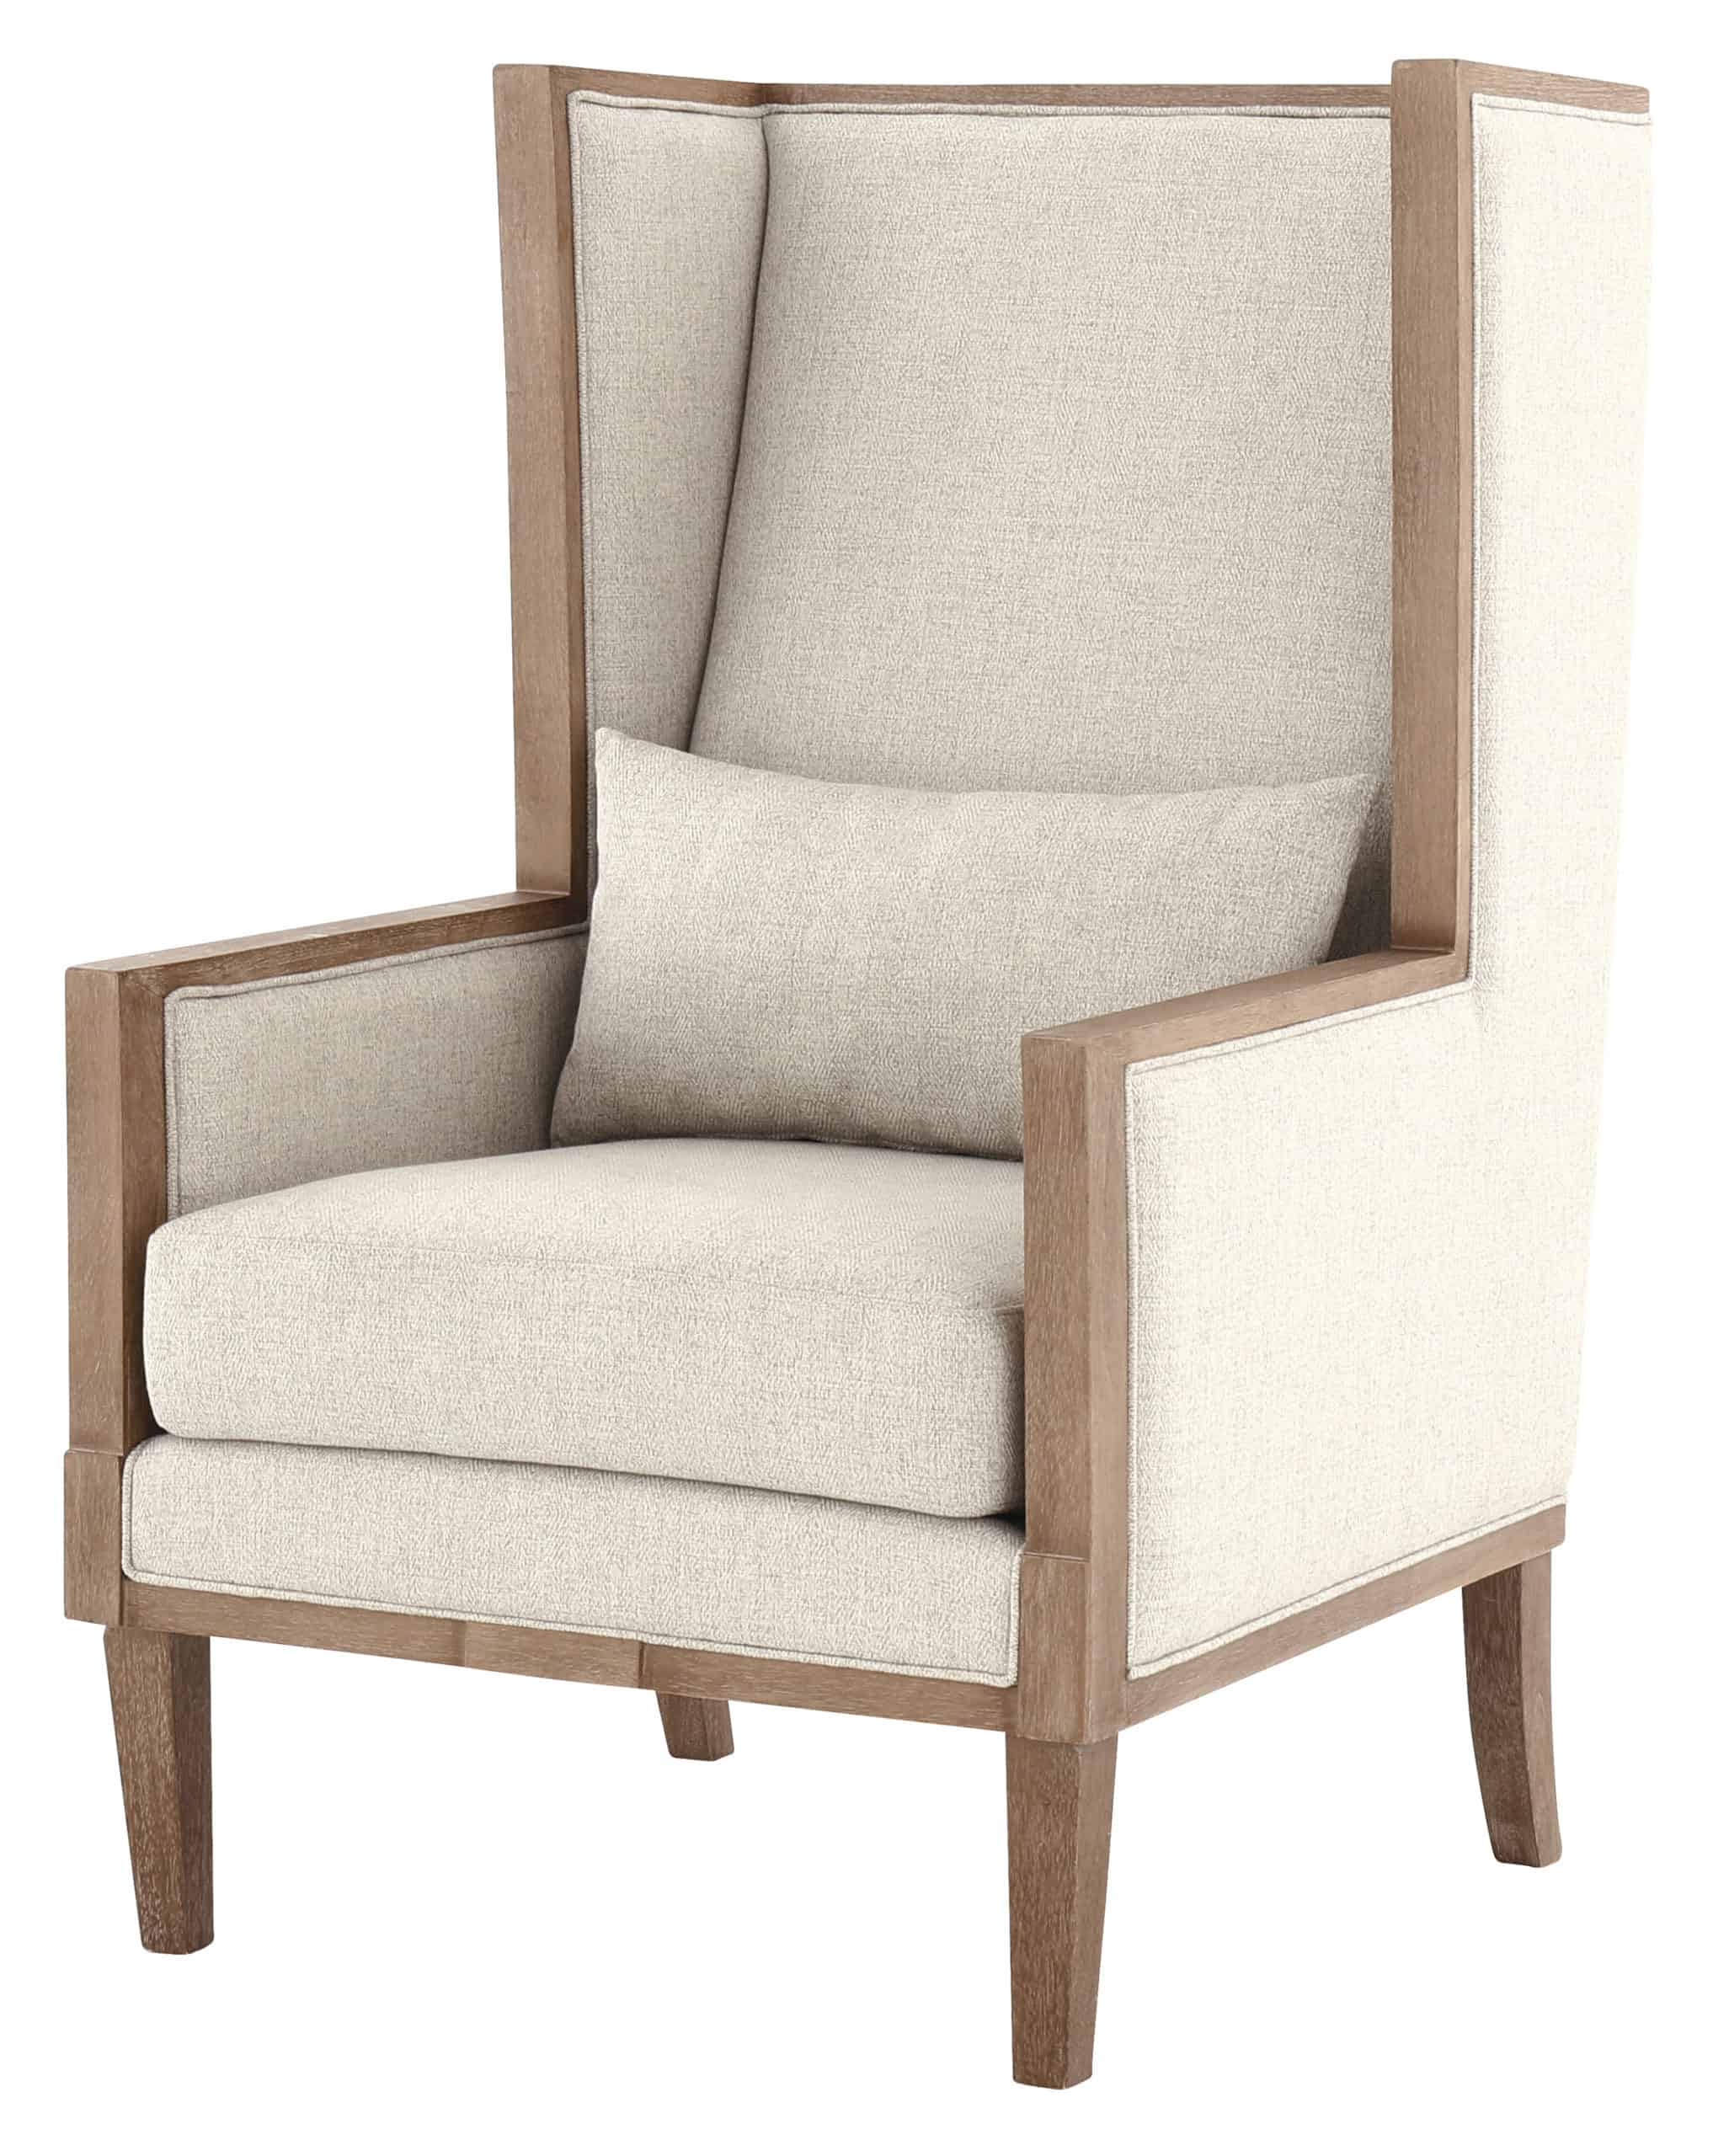 A3000255 Avila Accent Chair